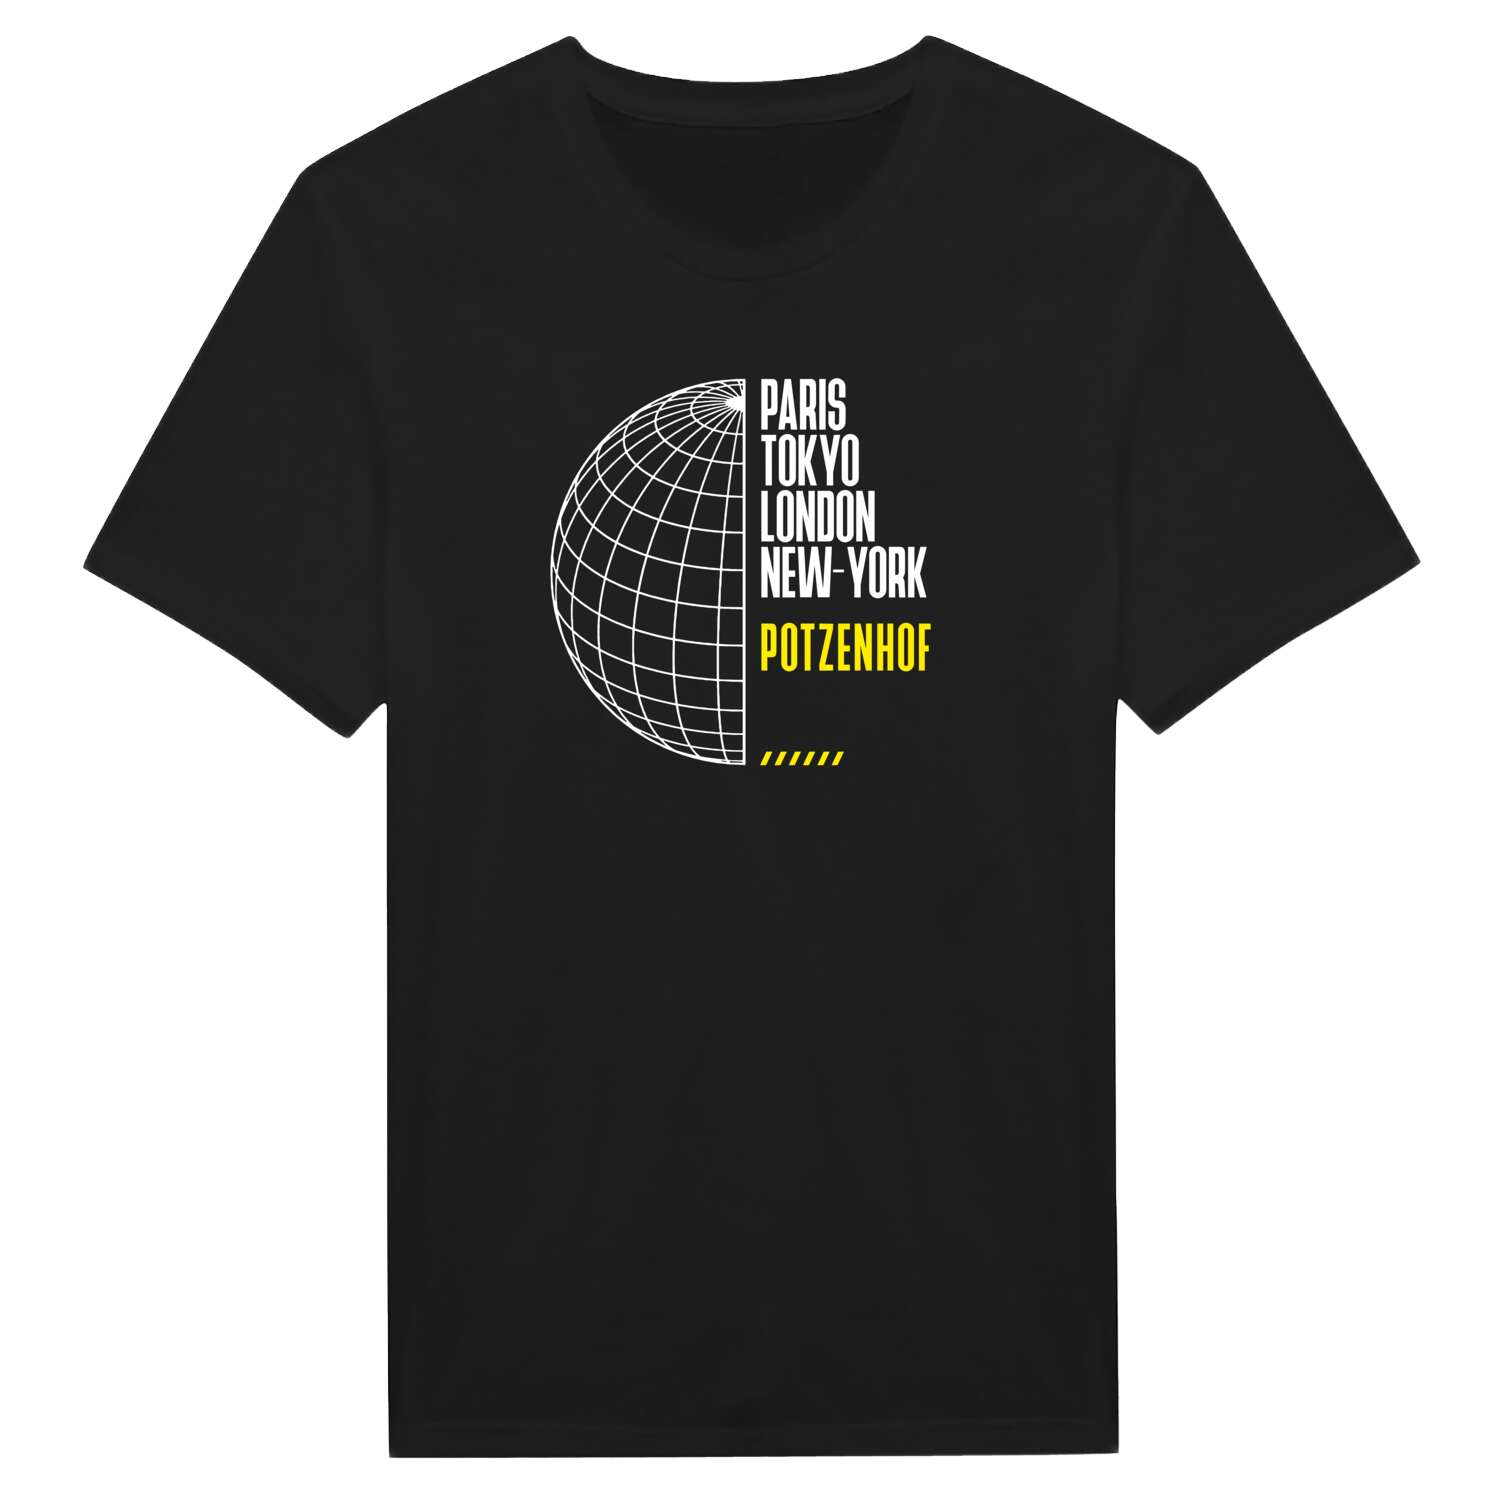 Potzenhof T-Shirt »Paris Tokyo London«